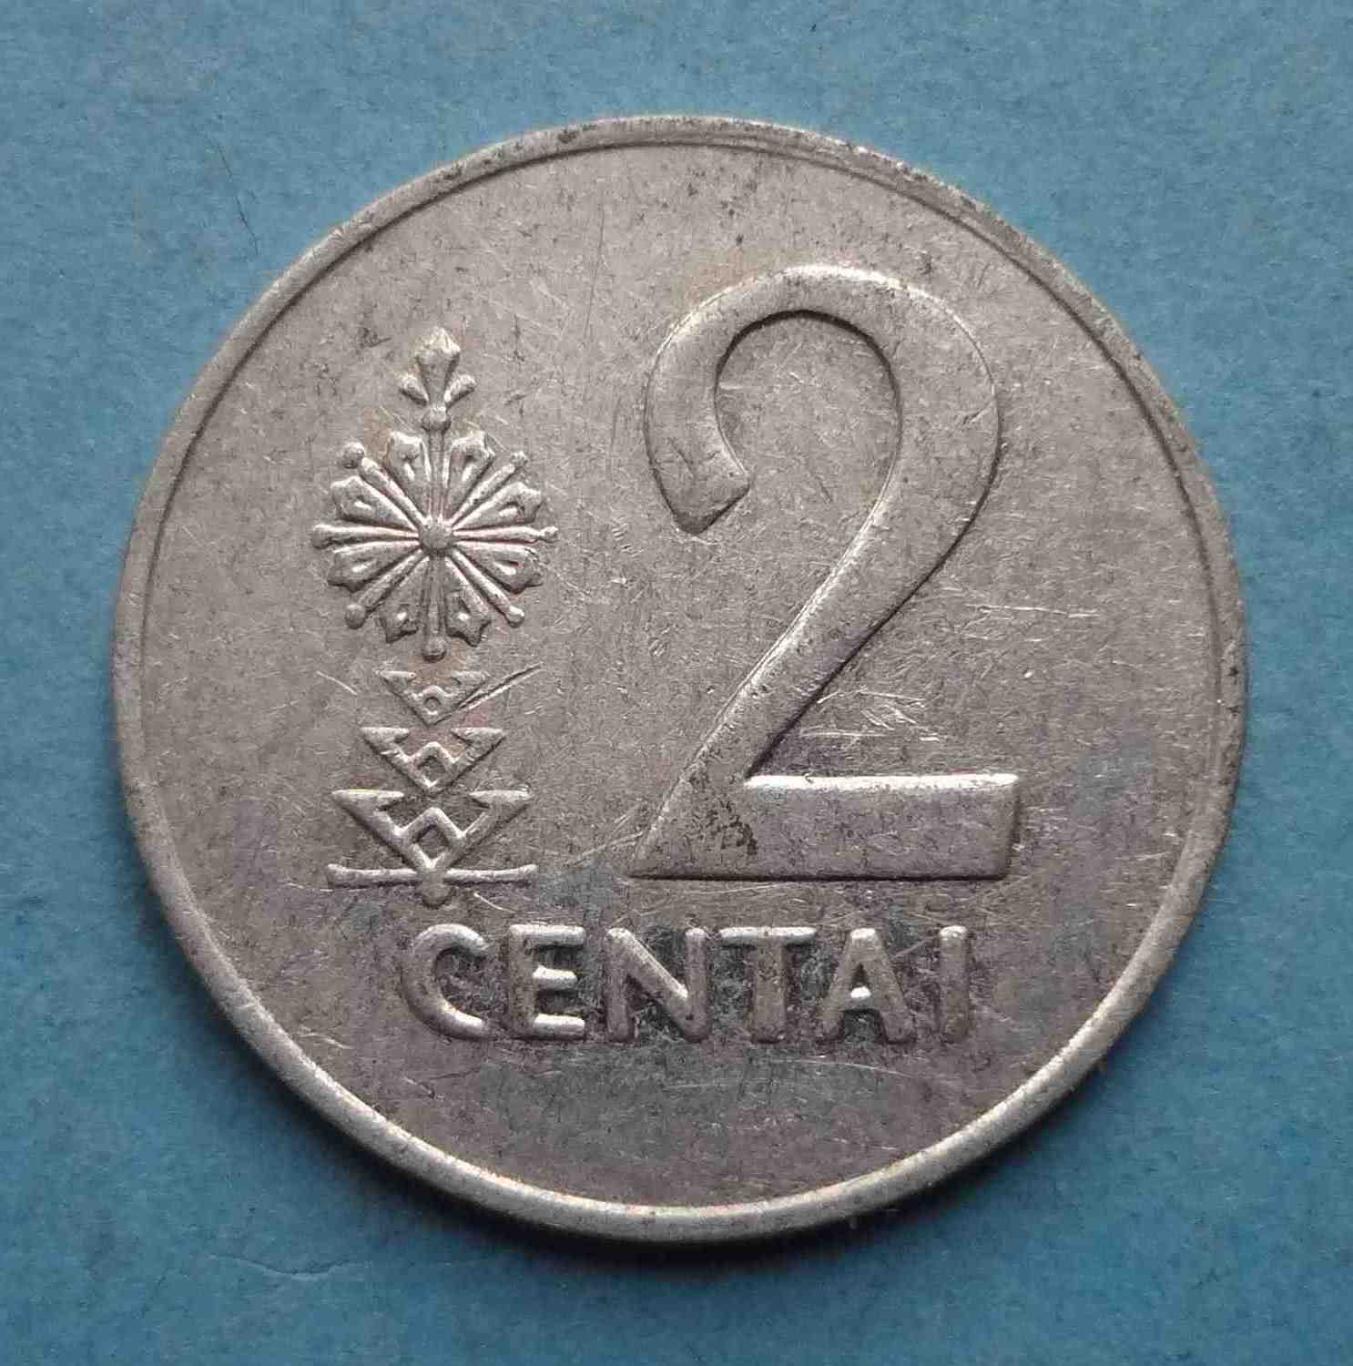 2 цента 1991 года Литва (39)